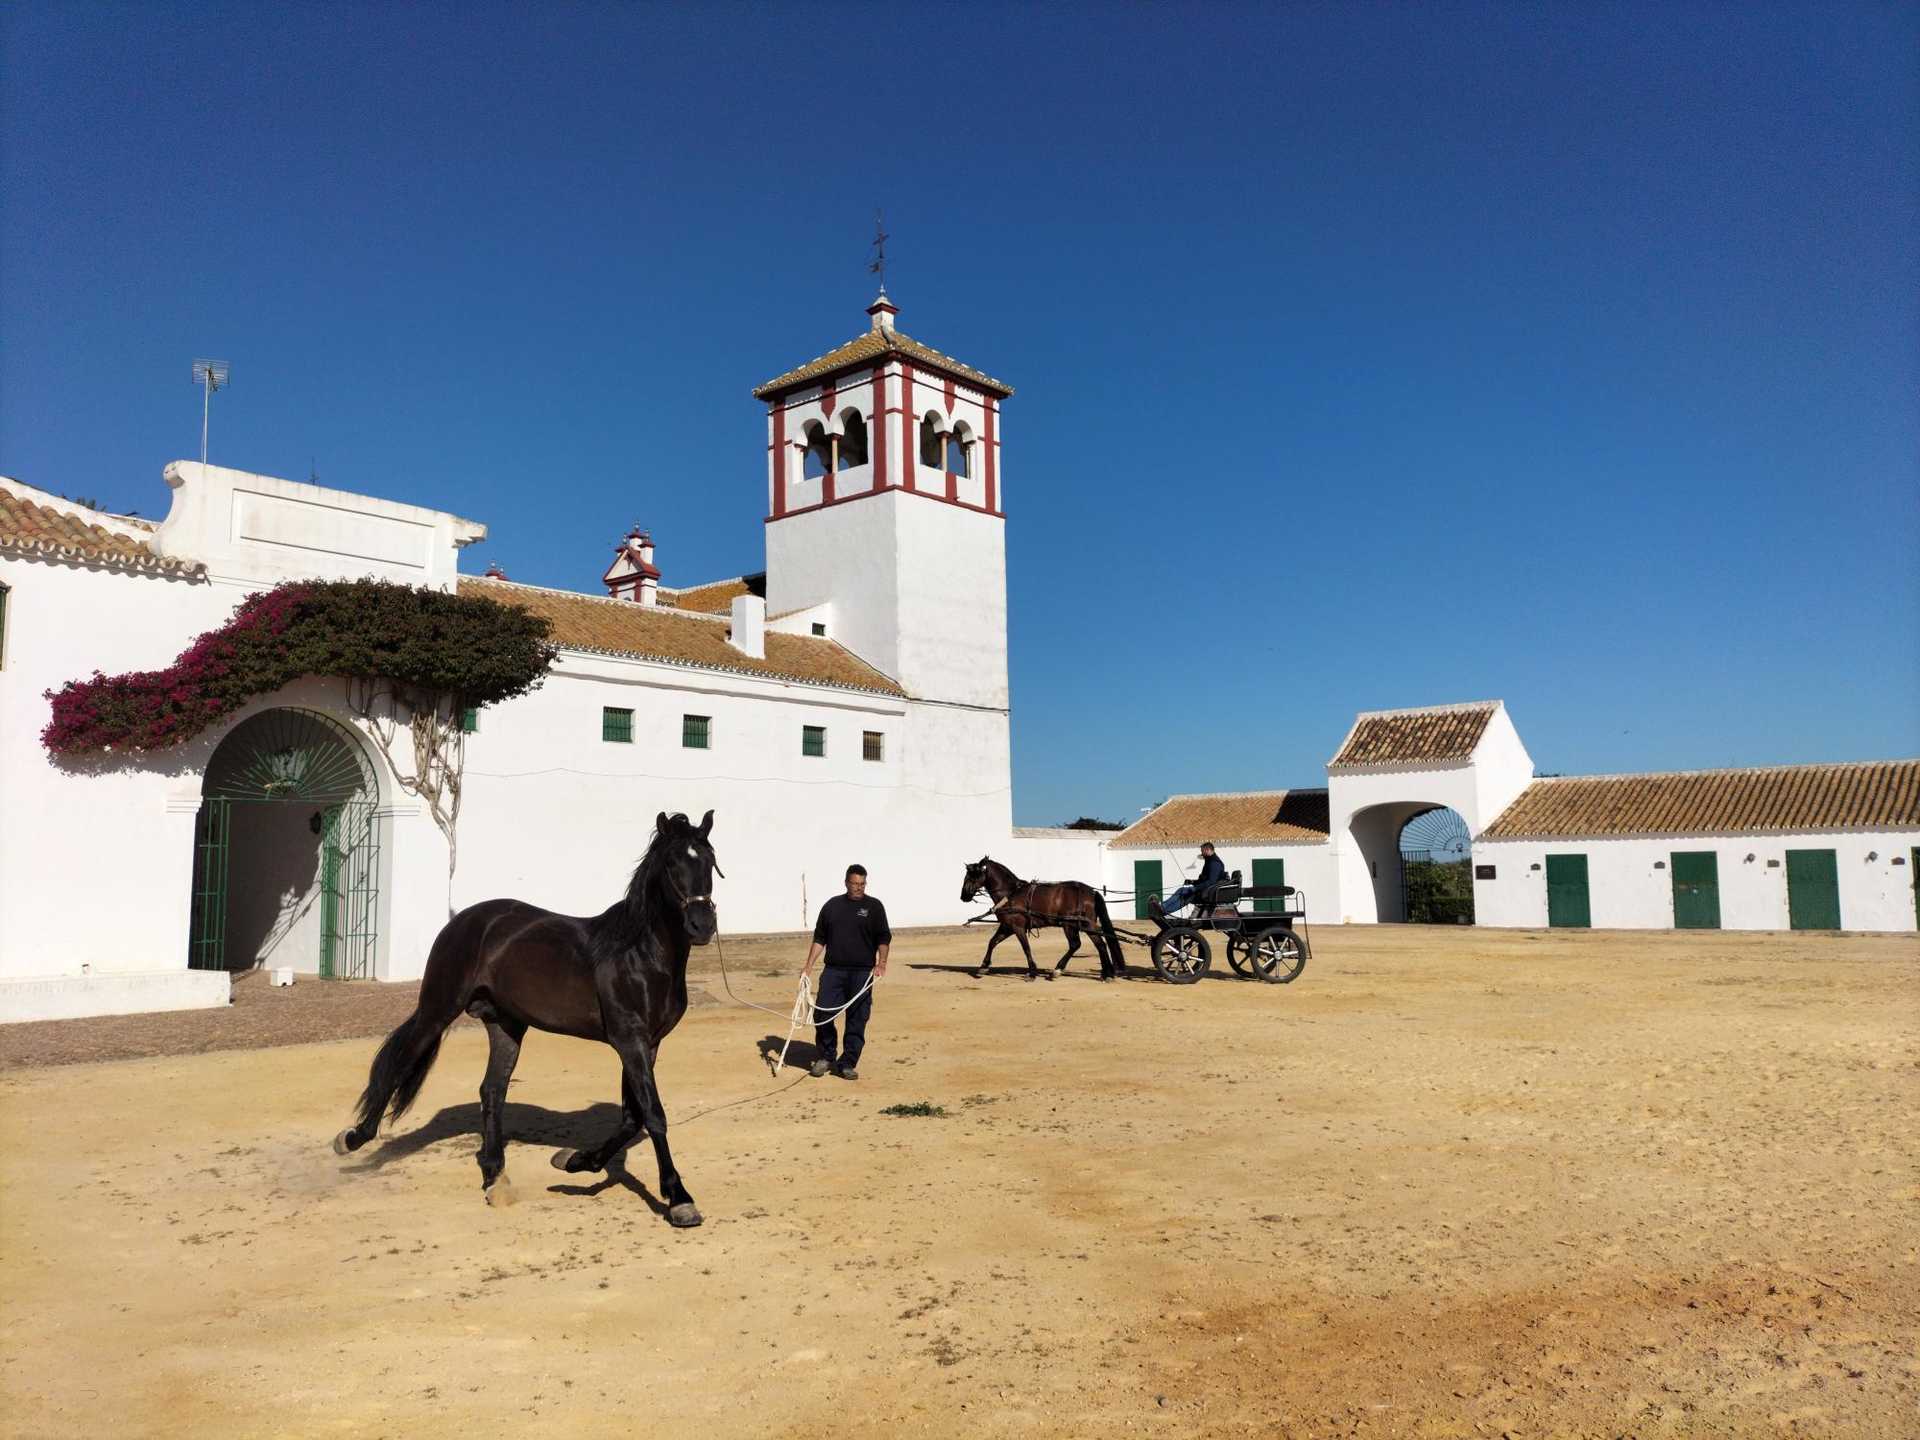 ACTIVIDAD - EXHIBICIÓN DE CABALLOS. Demostración de caballos de pura raza española.